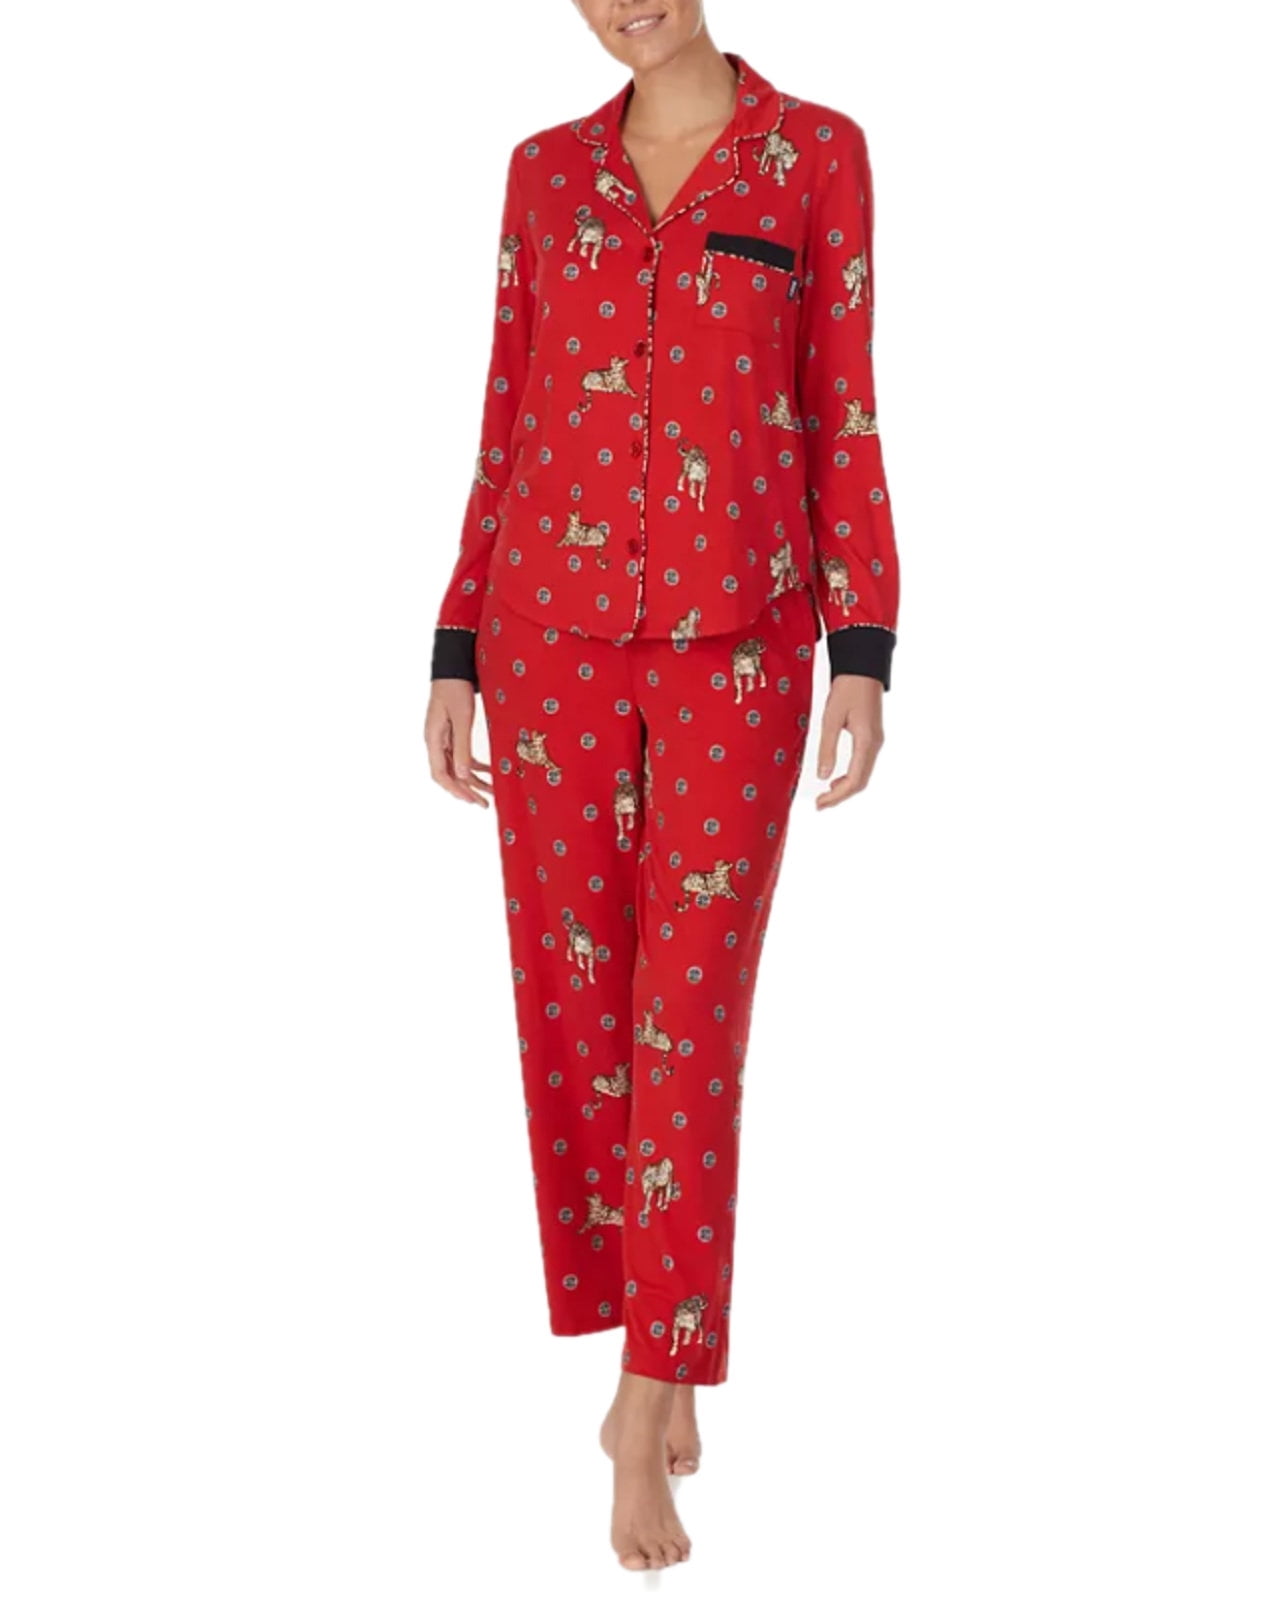 DKNY Women's Long Sleeve Animal Printed Soft-Knit Pajamas Set, Red, L -  